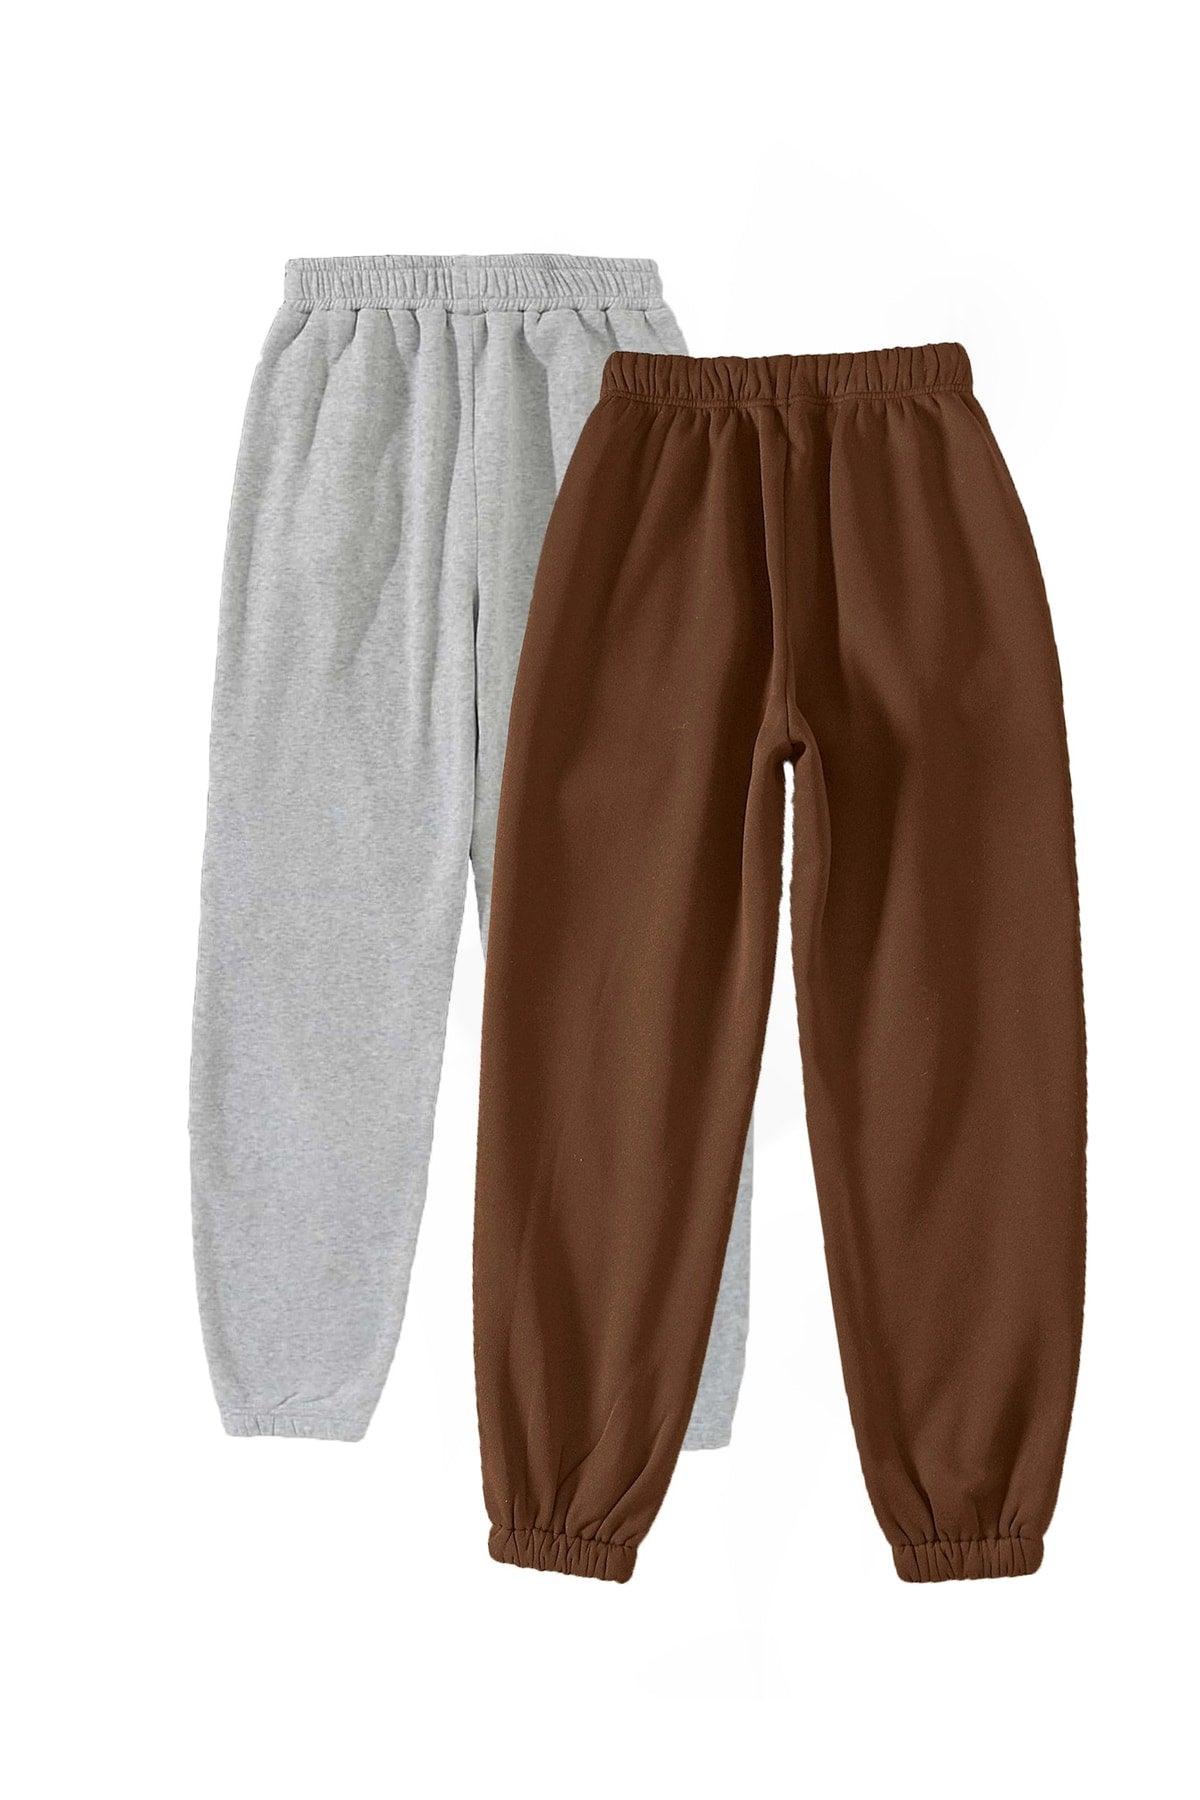 2-pack Jogger Sweatpants - Gray And Brown, Elastic Legs, High Waist Summer - Swordslife